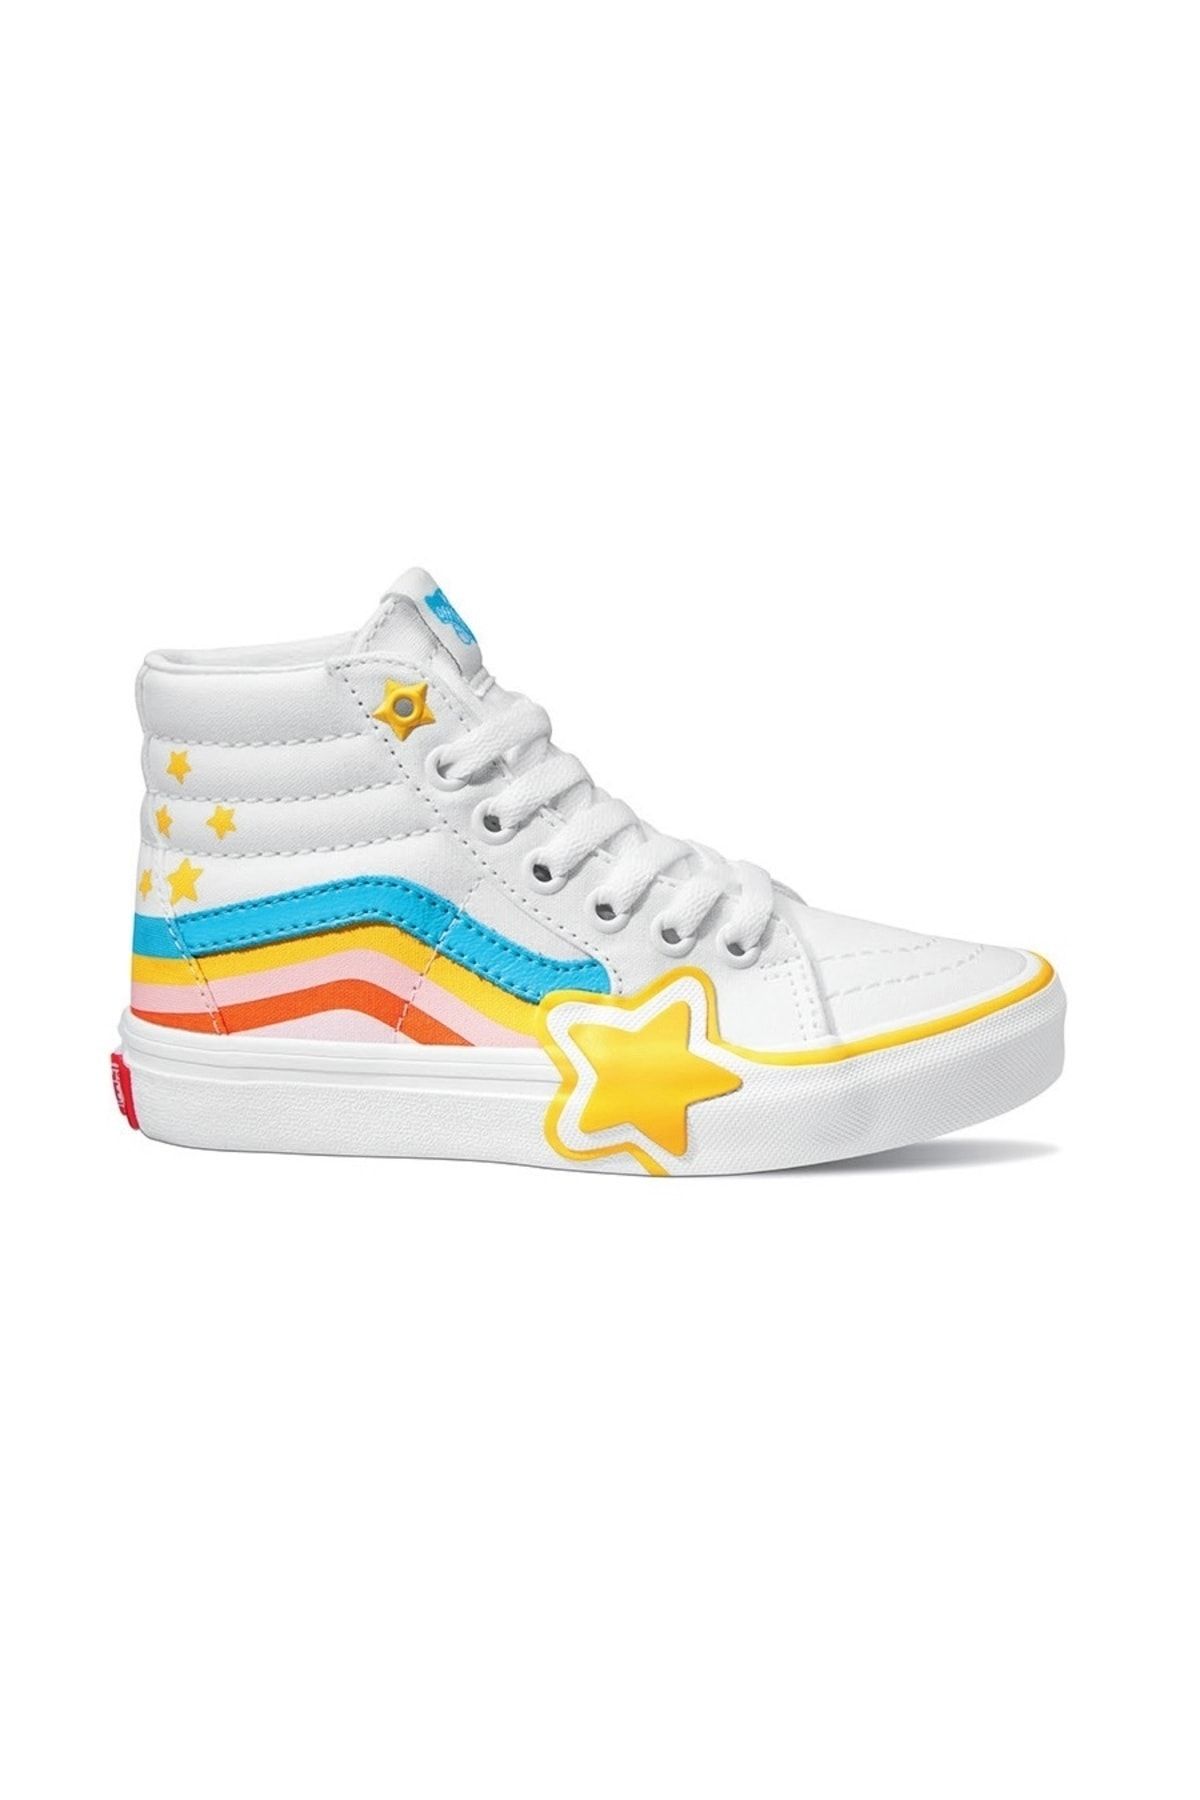 Vans UY SK8-Hi Rainbow Star Beyaz/Renkli Unisex Çocuk Sneaker